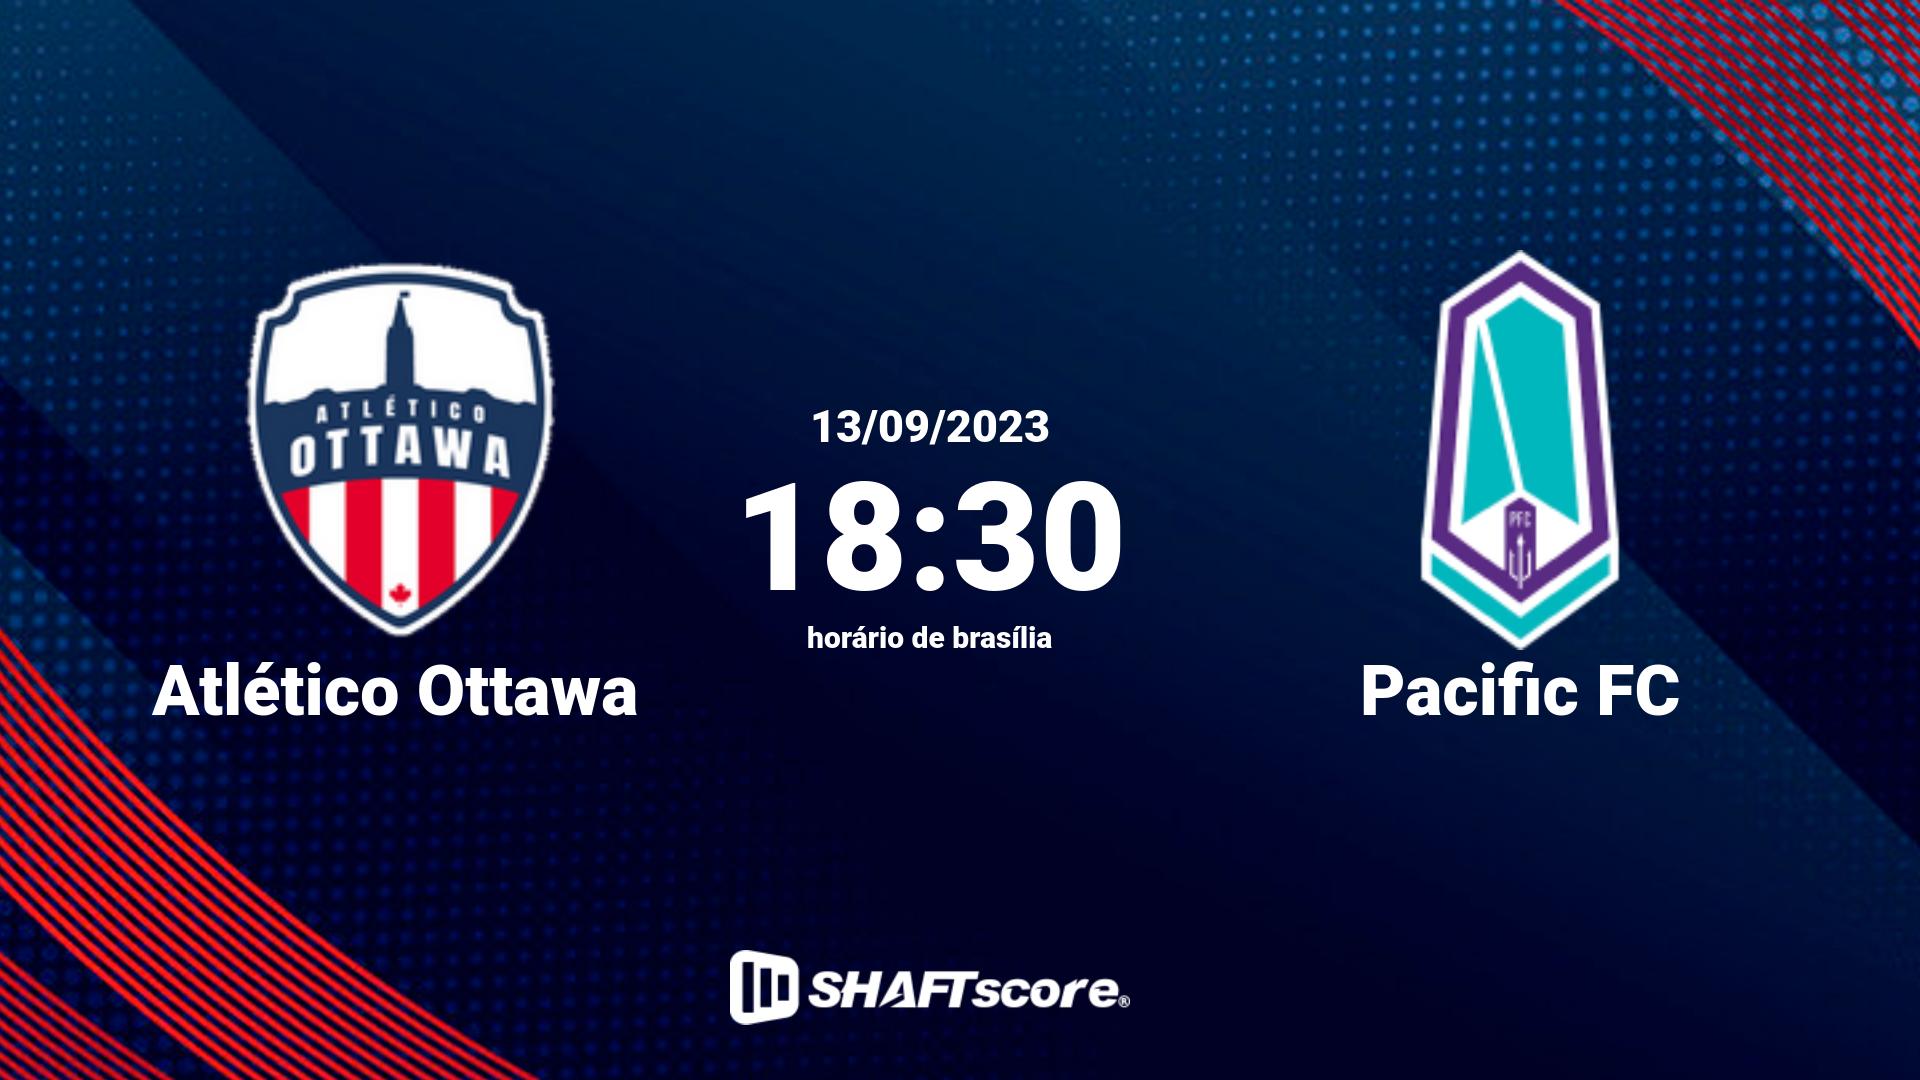 Estatísticas do jogo Atlético Ottawa vs Pacific FC 13.09 18:30